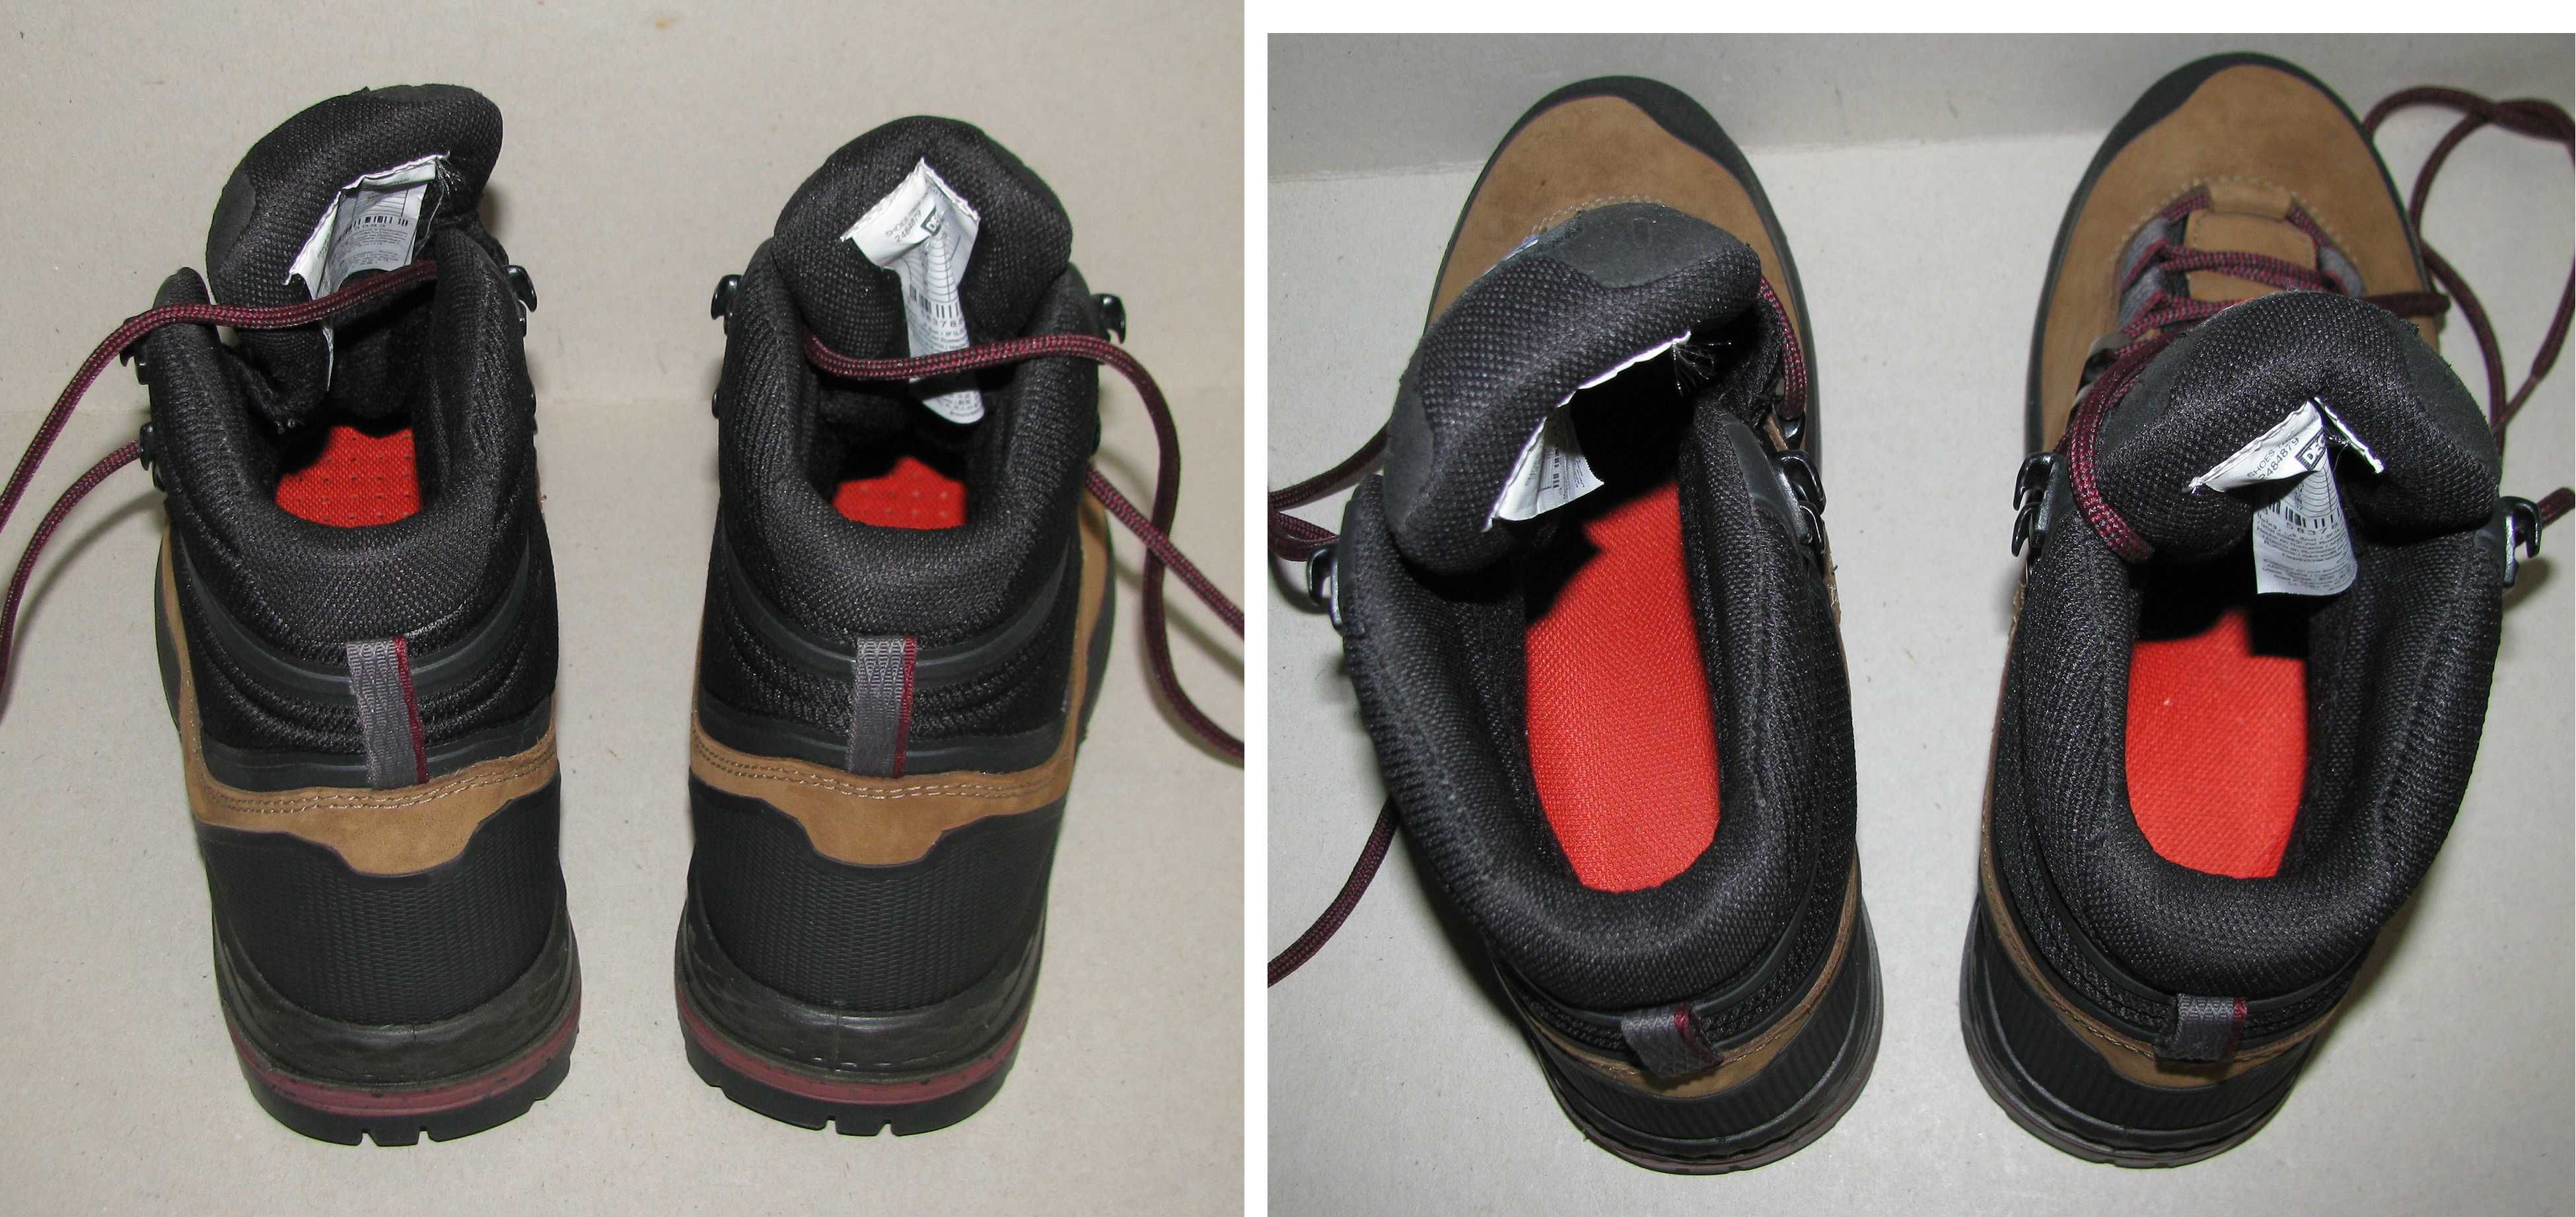 Туристически обувки Forclaz, размер 36, нови неупотребявани